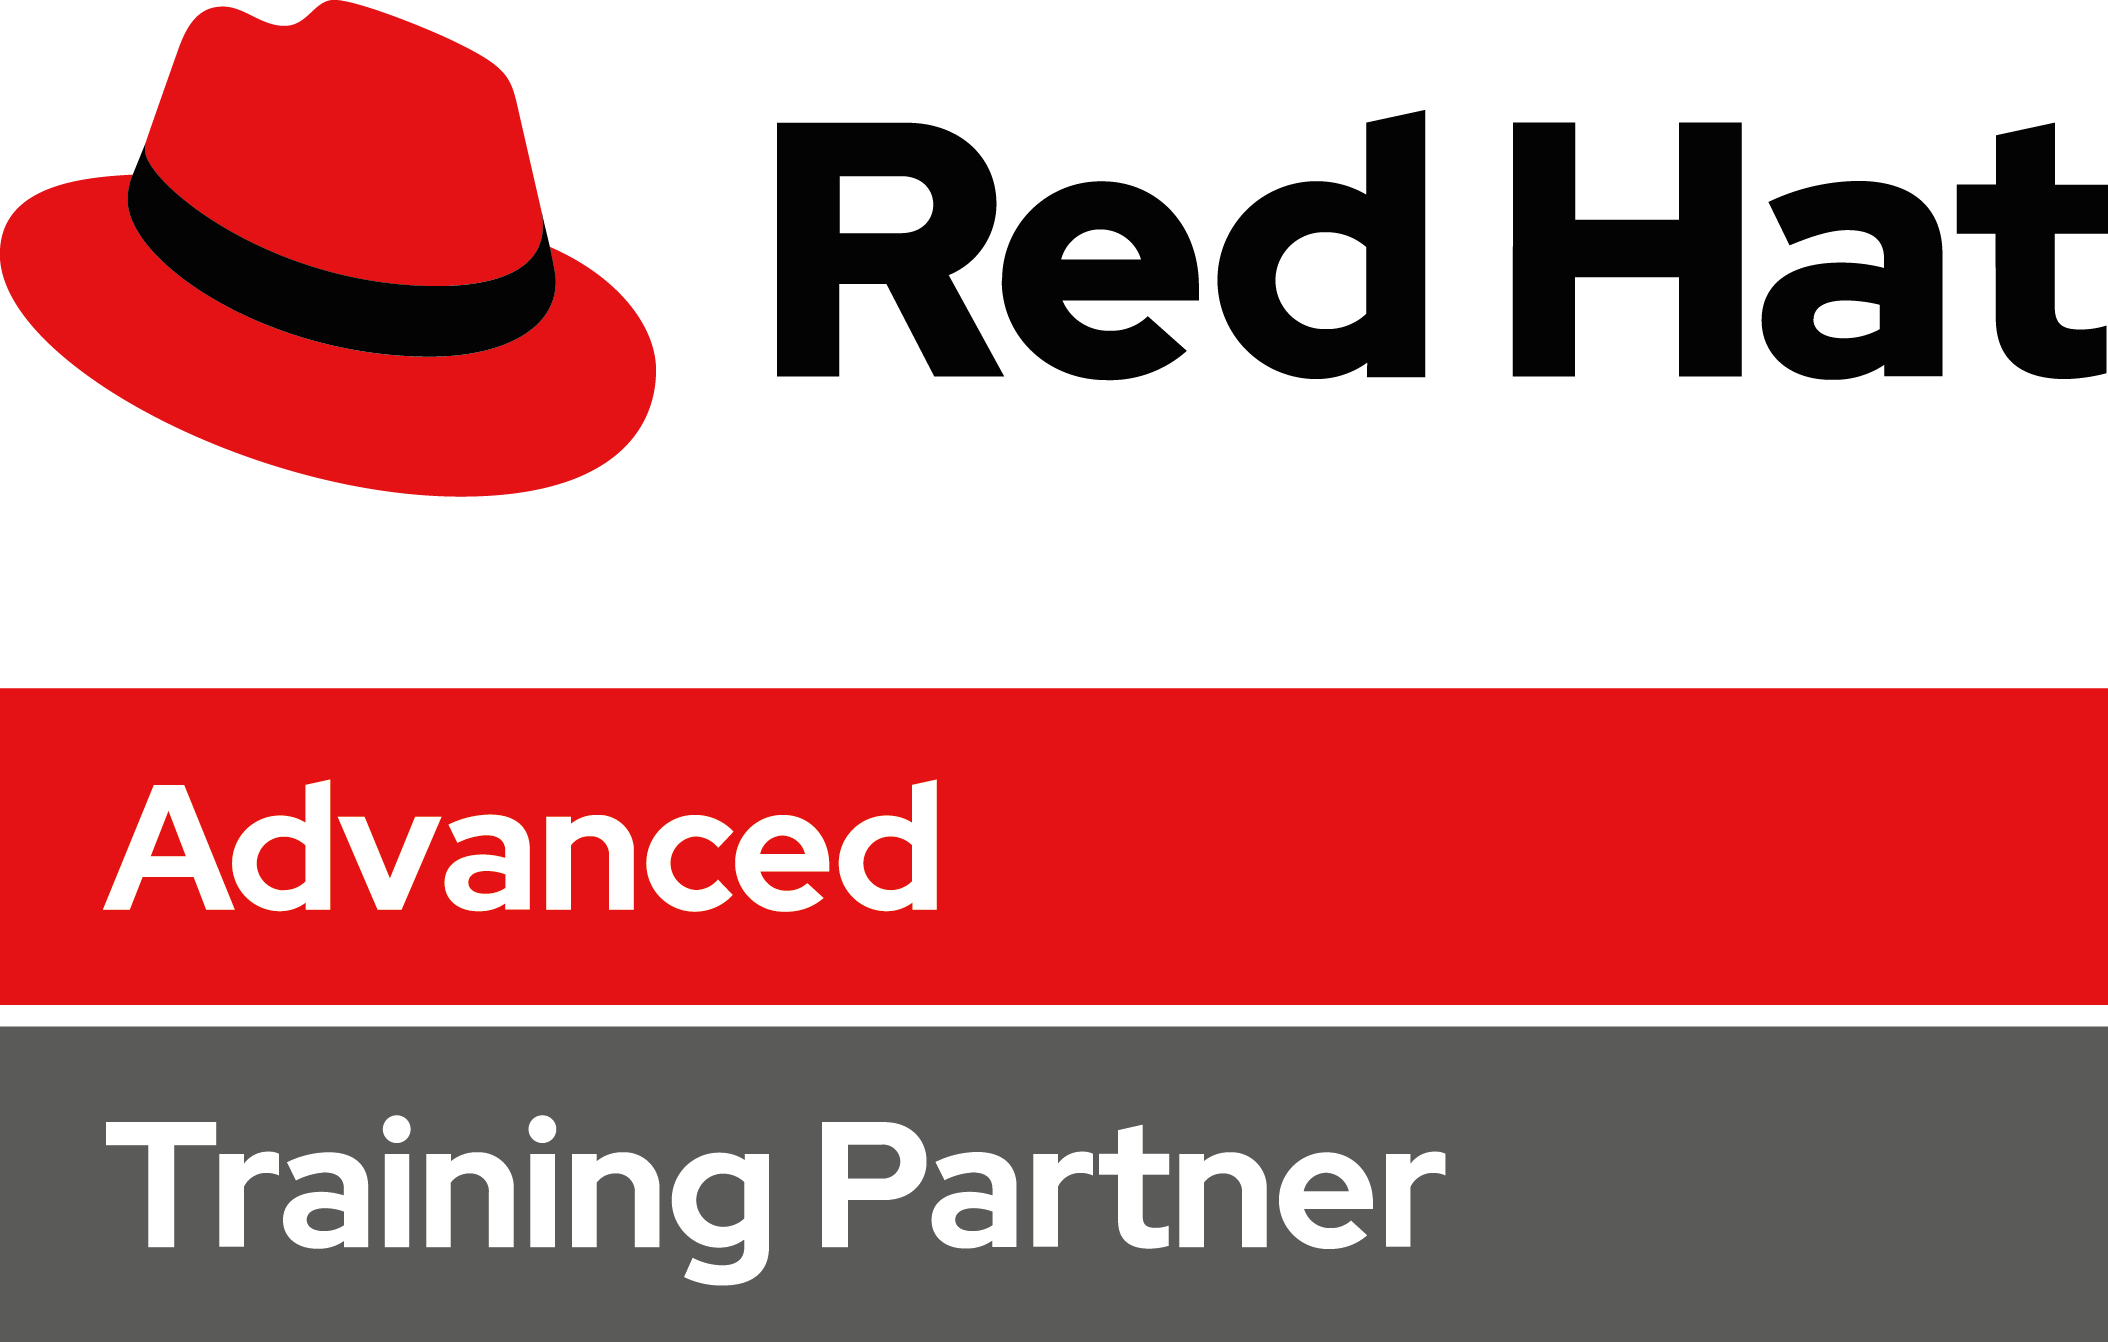 Red Hat Advanced Training Partner Authorized Reseller Logo